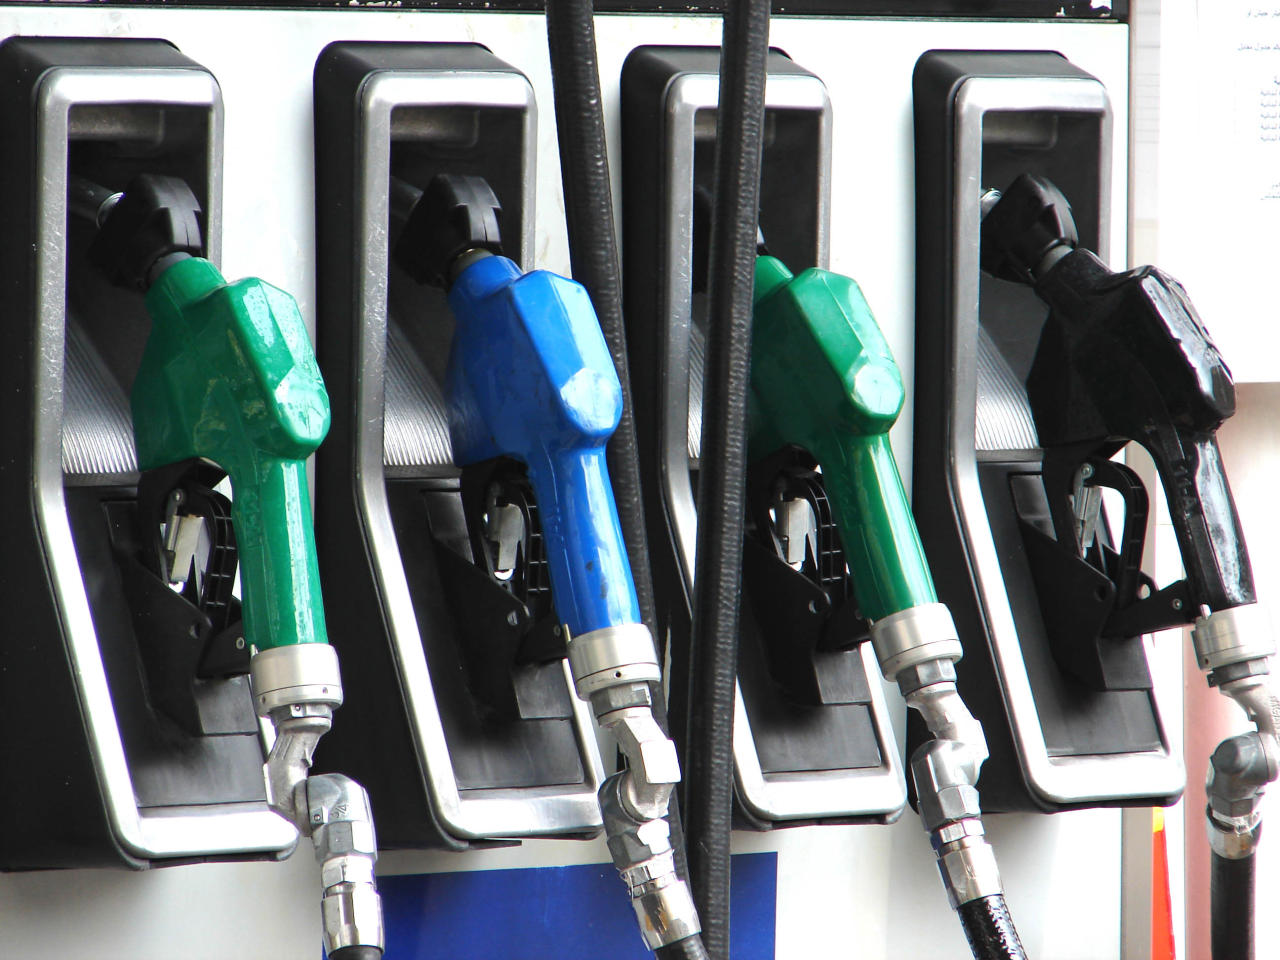 SOCAR boosts gasoline, diesel production in Q1 2020